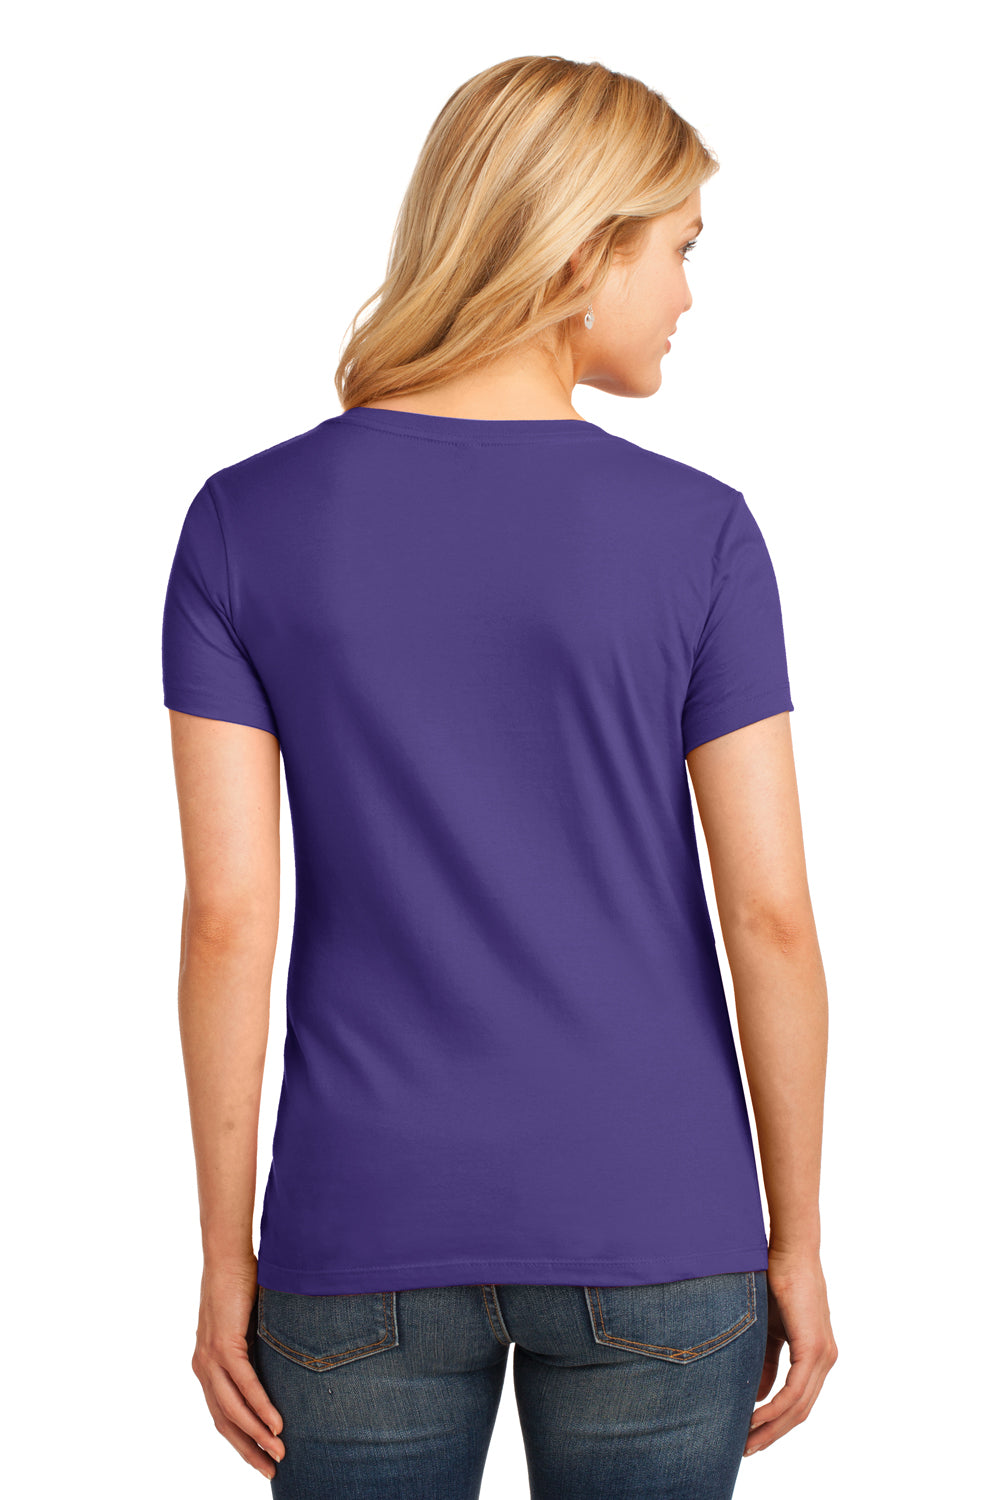 Port & Company LPC54V Womens Core Short Sleeve V-Neck T-Shirt Purple Back